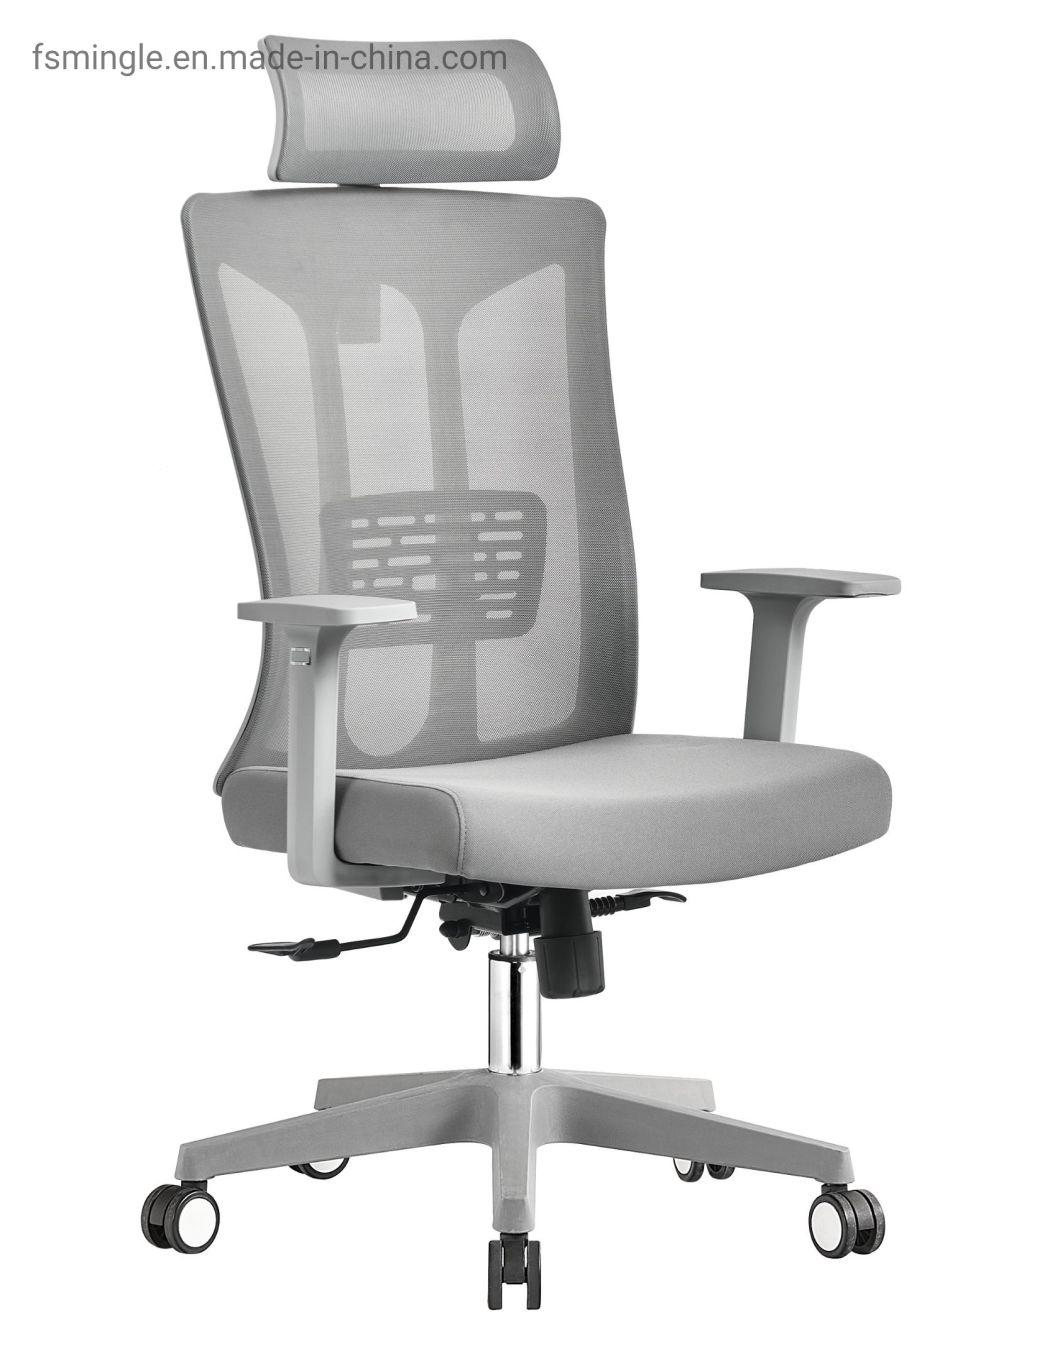 Modern Design Adjustable High Back Executive Chair Ergonomic Mesh Office Chair with Headrest